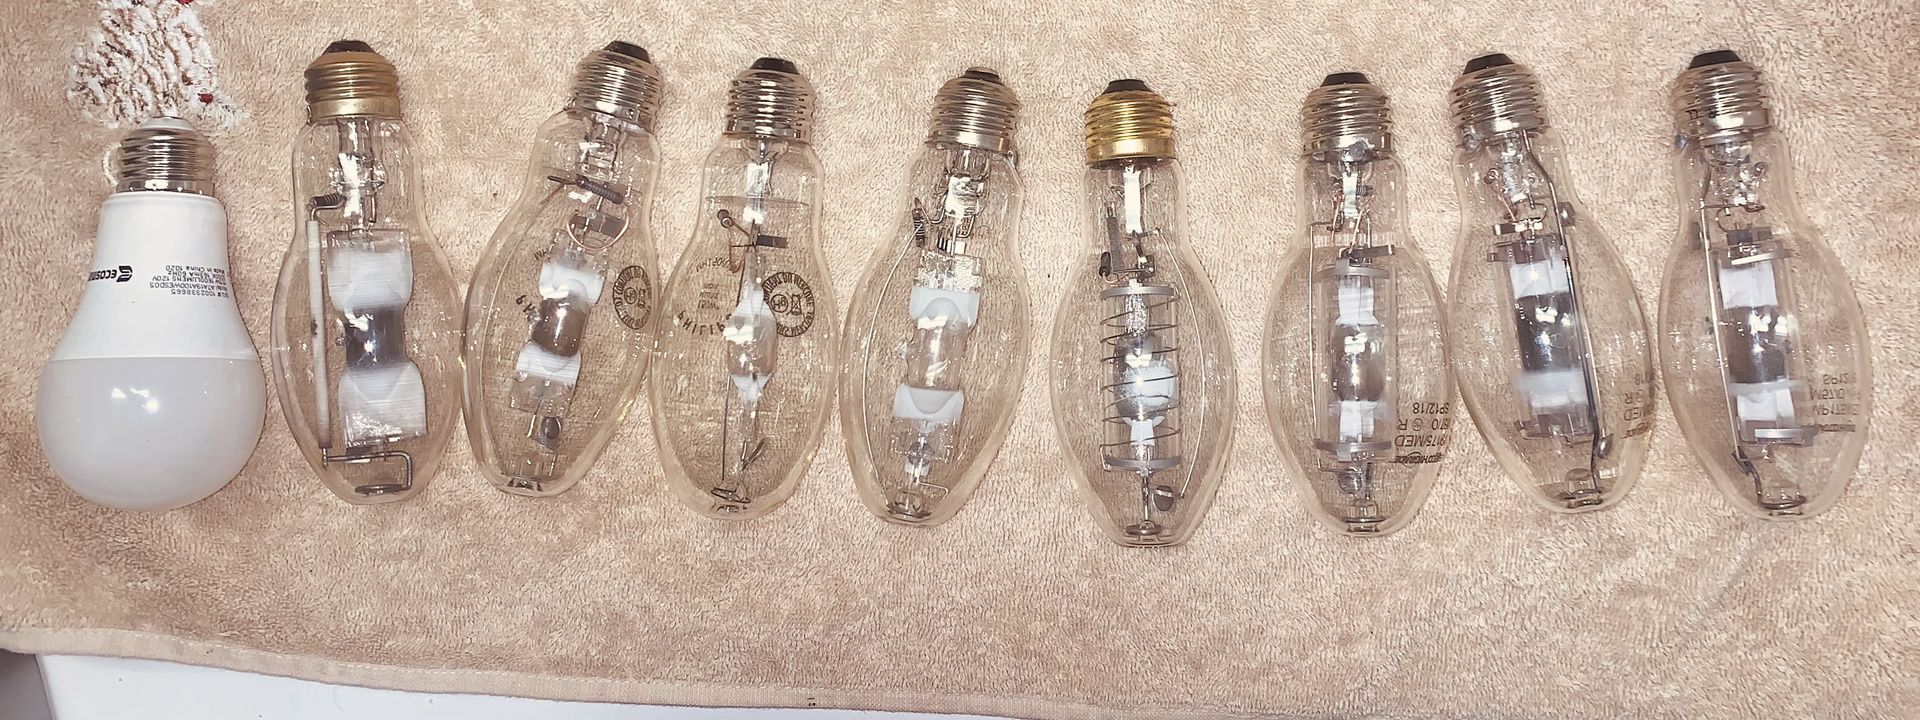 hygrade bulbs, transmitters , capacitor s